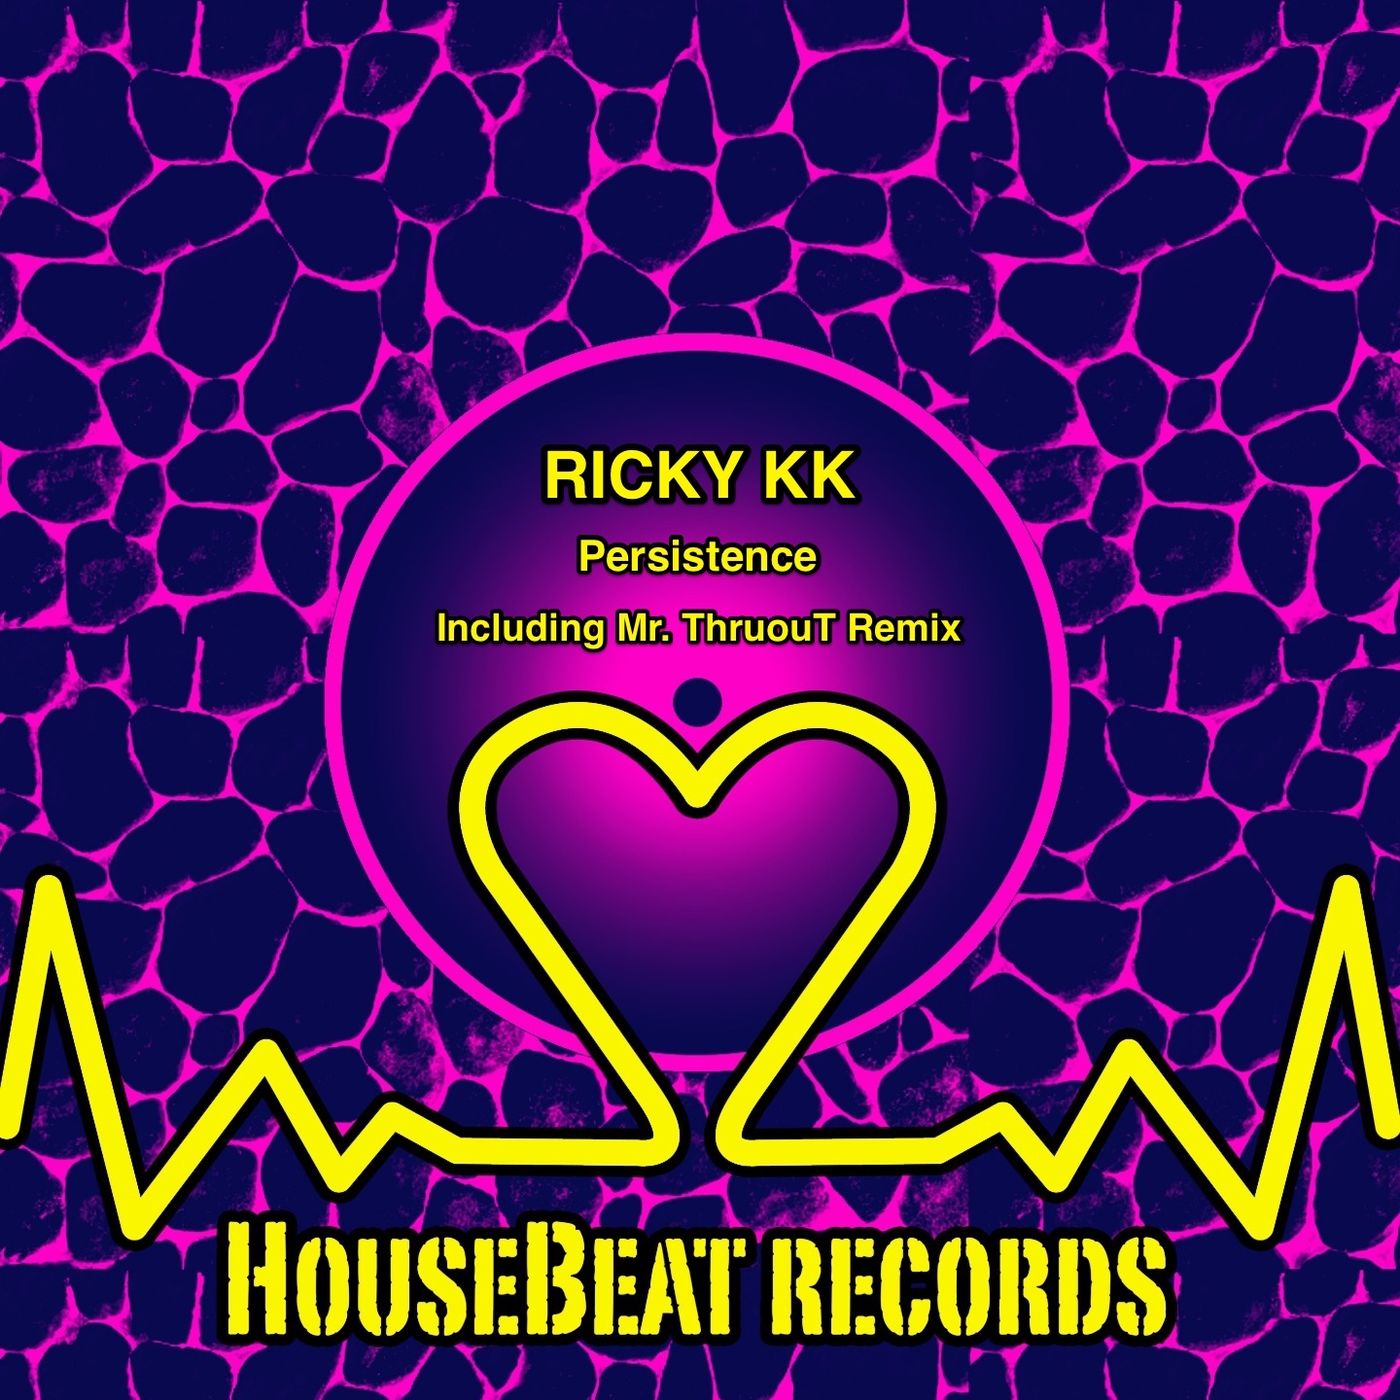 Ricky KK - Persistence / HouseBeat Records